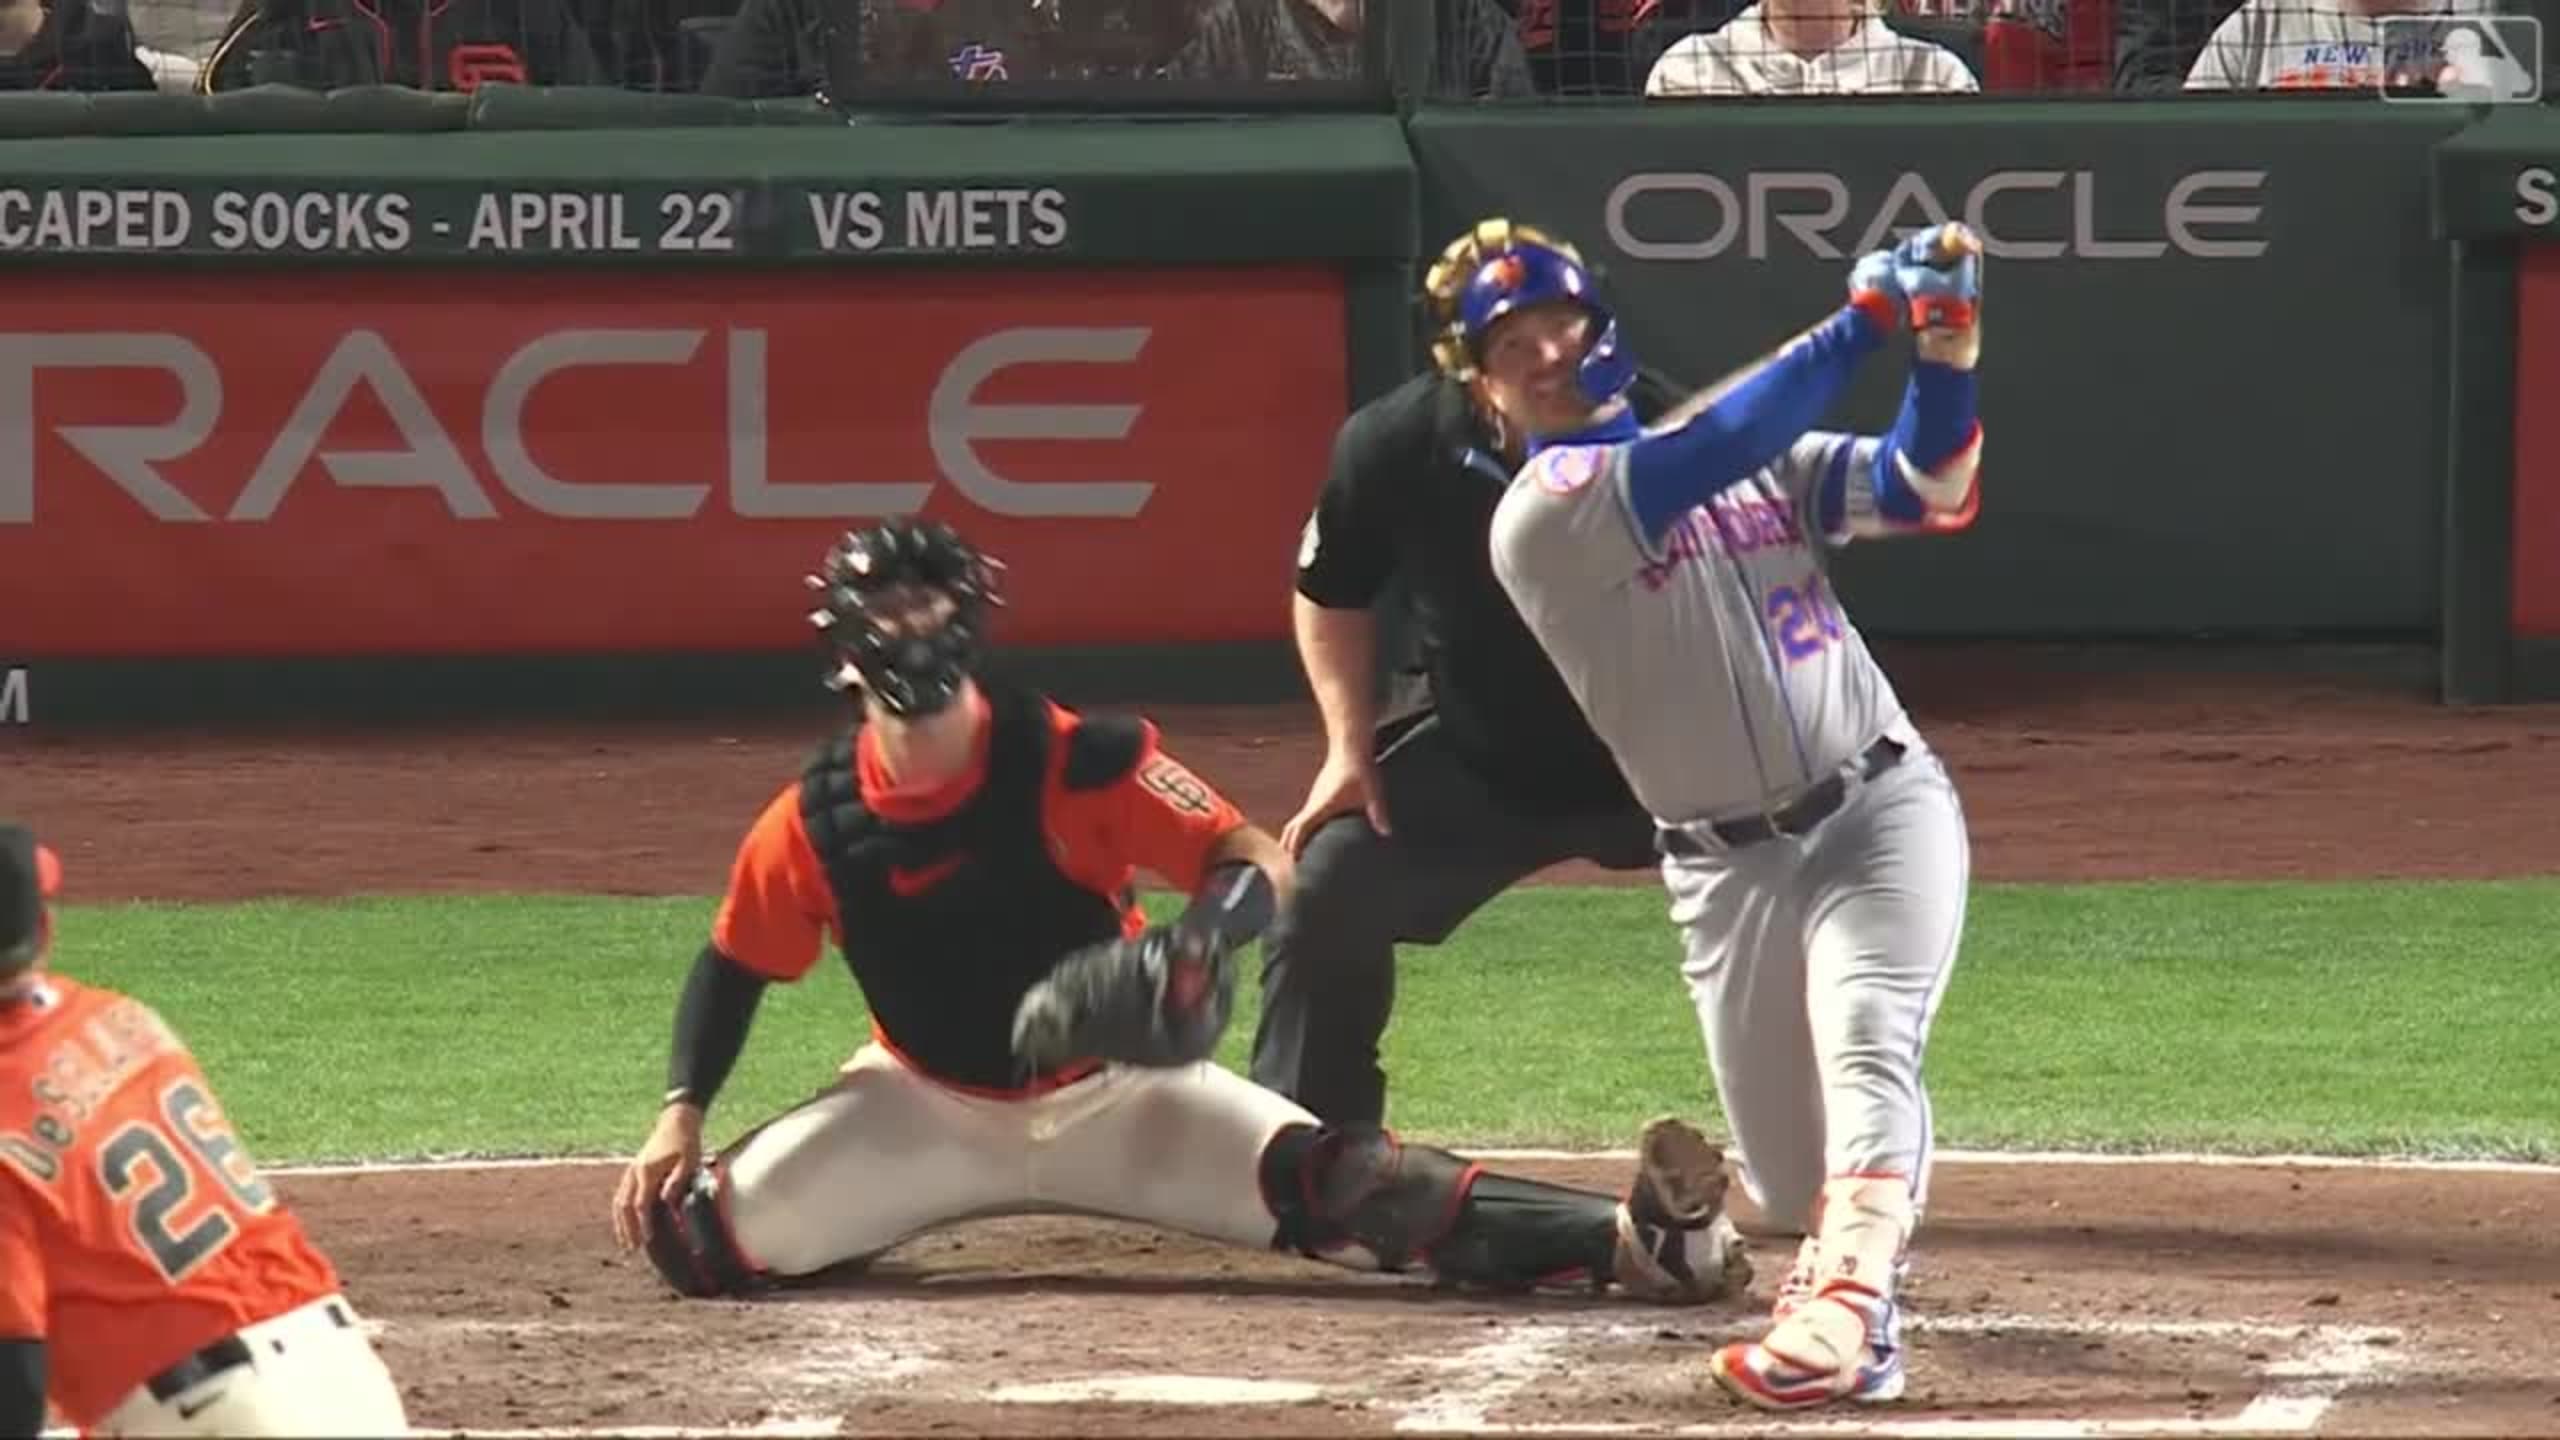 Pete Alonso (2 HRs, 6 RBIs) helps Mets end six-game losing streak